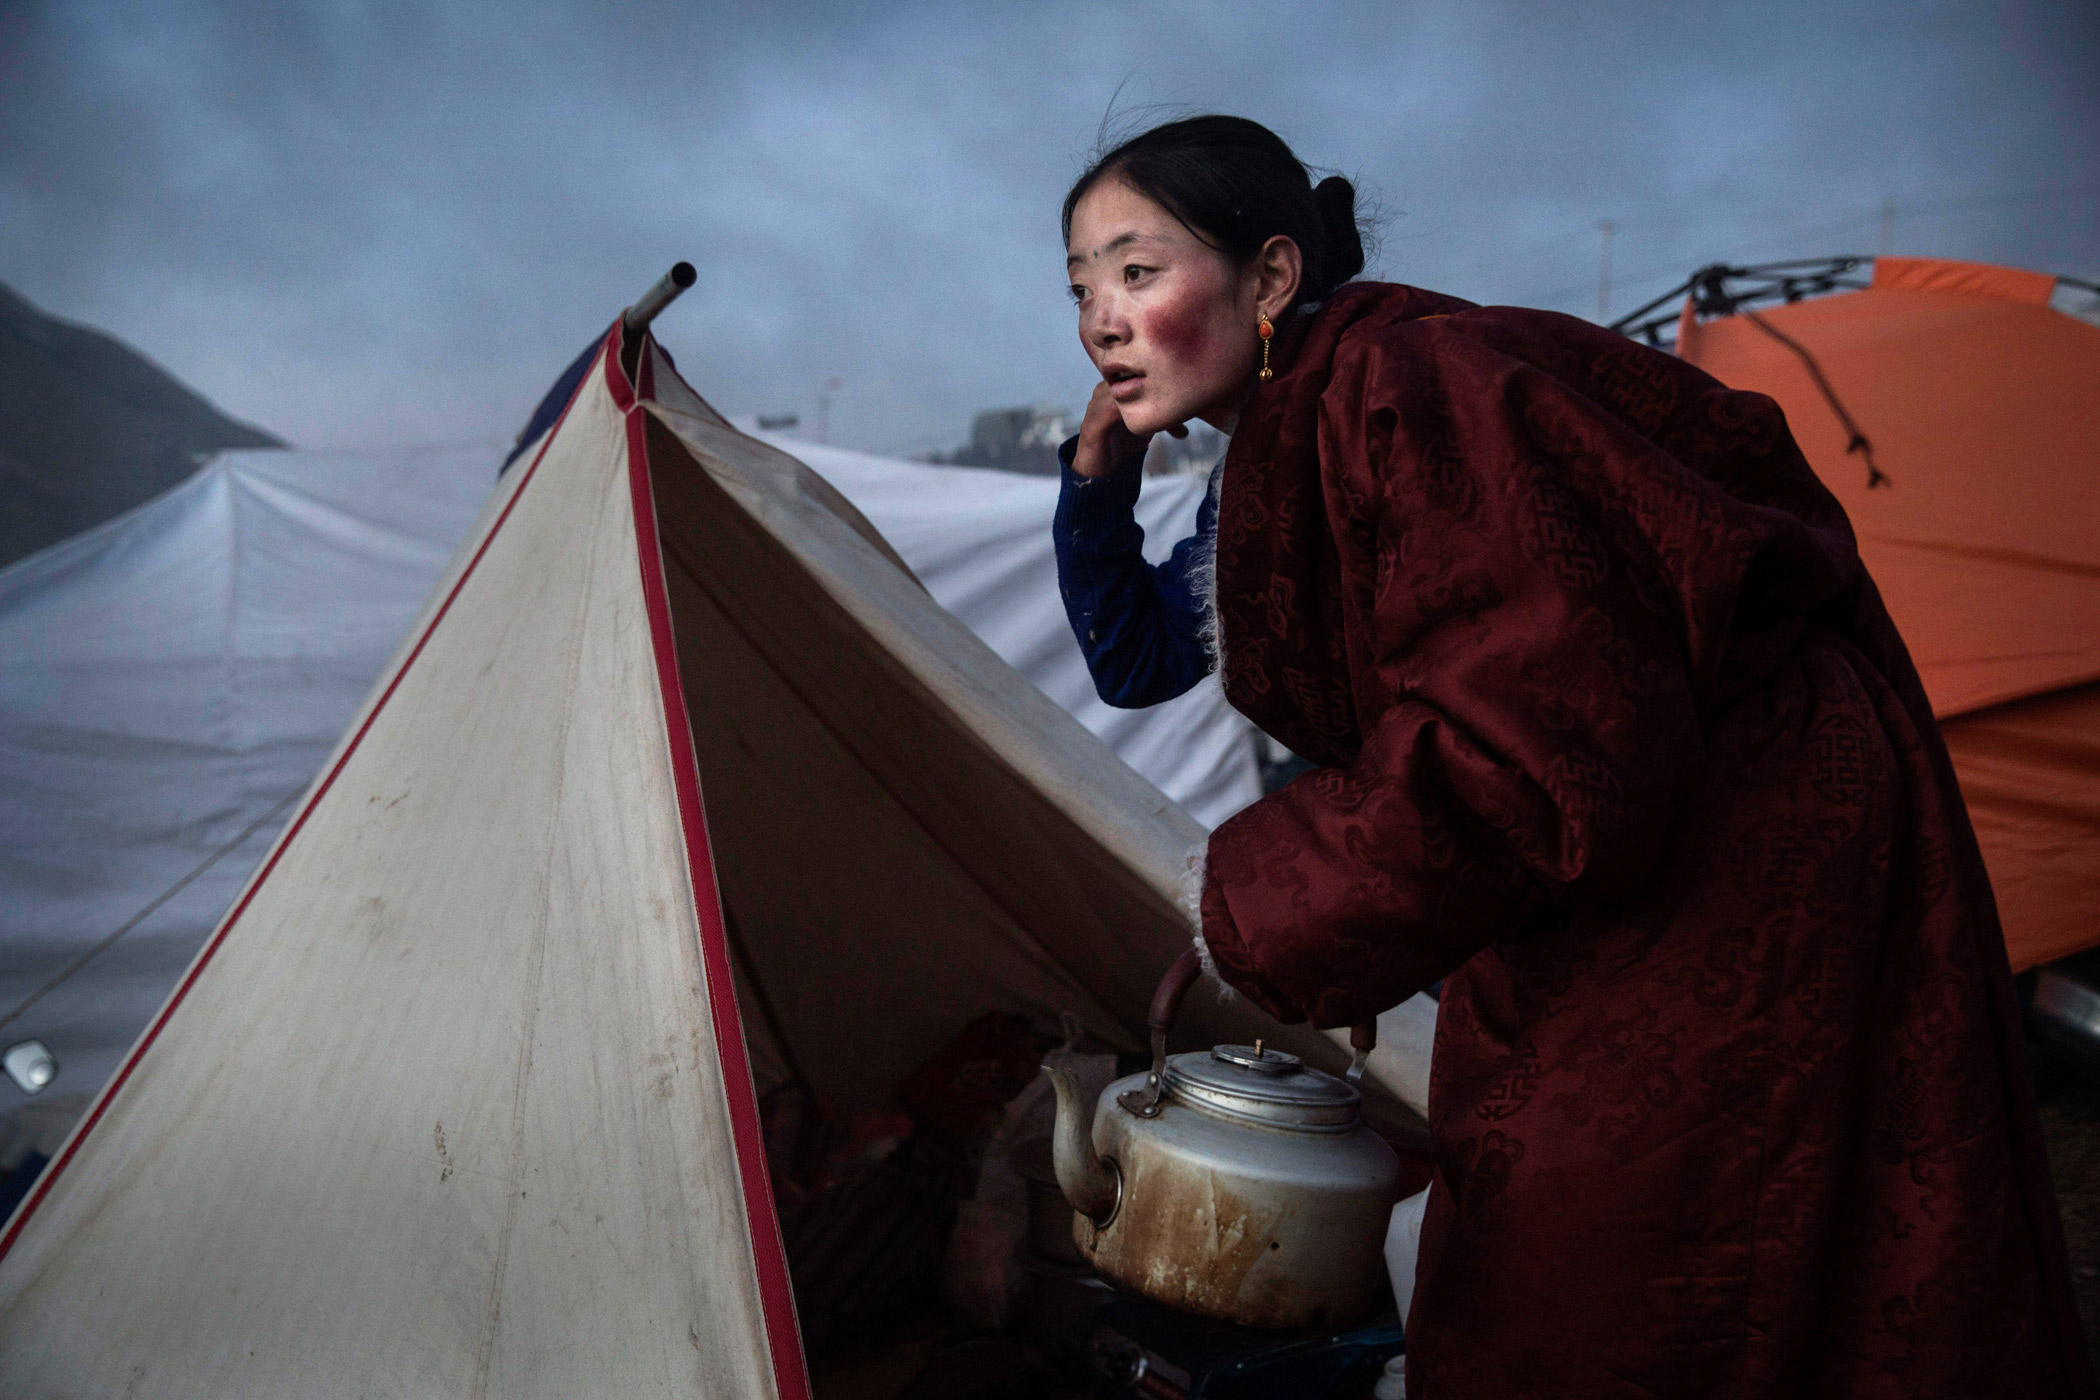 A Tibetan Buddhist nomad woman prepares tea at dusk following a chanting session.